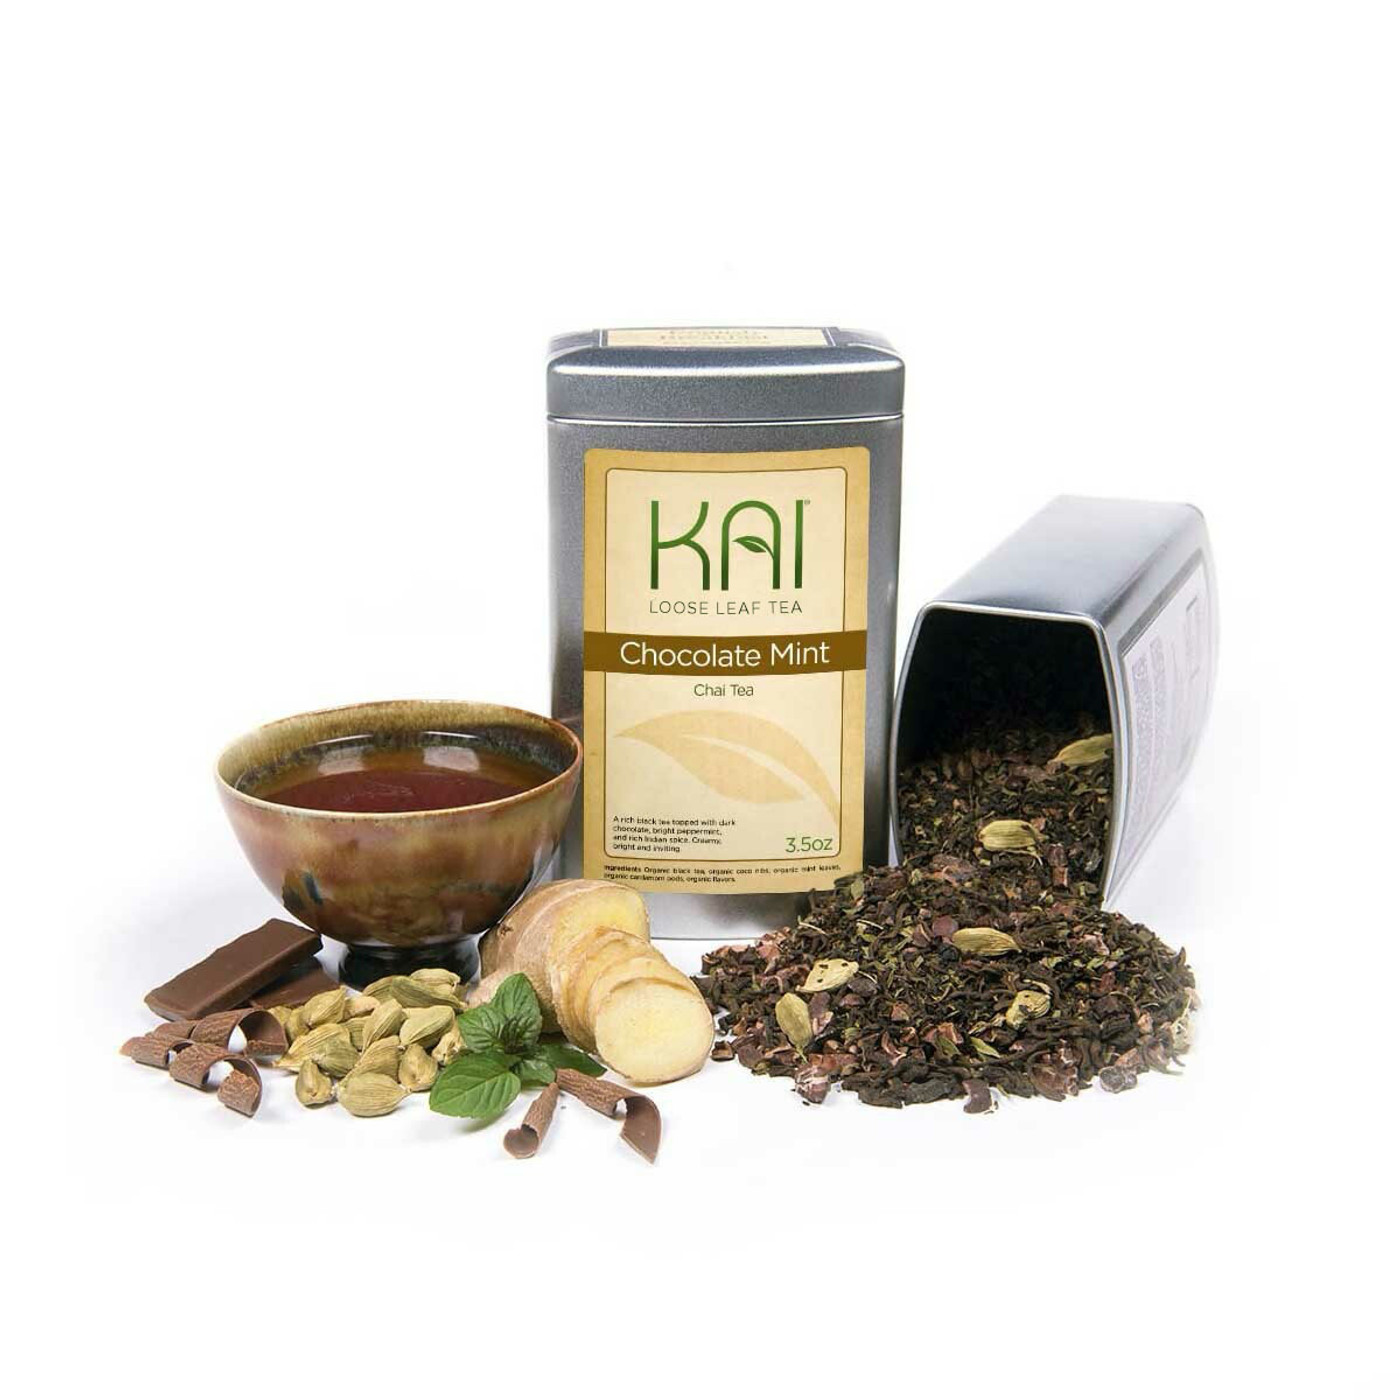 Kai tea Chocolate Mint Chai